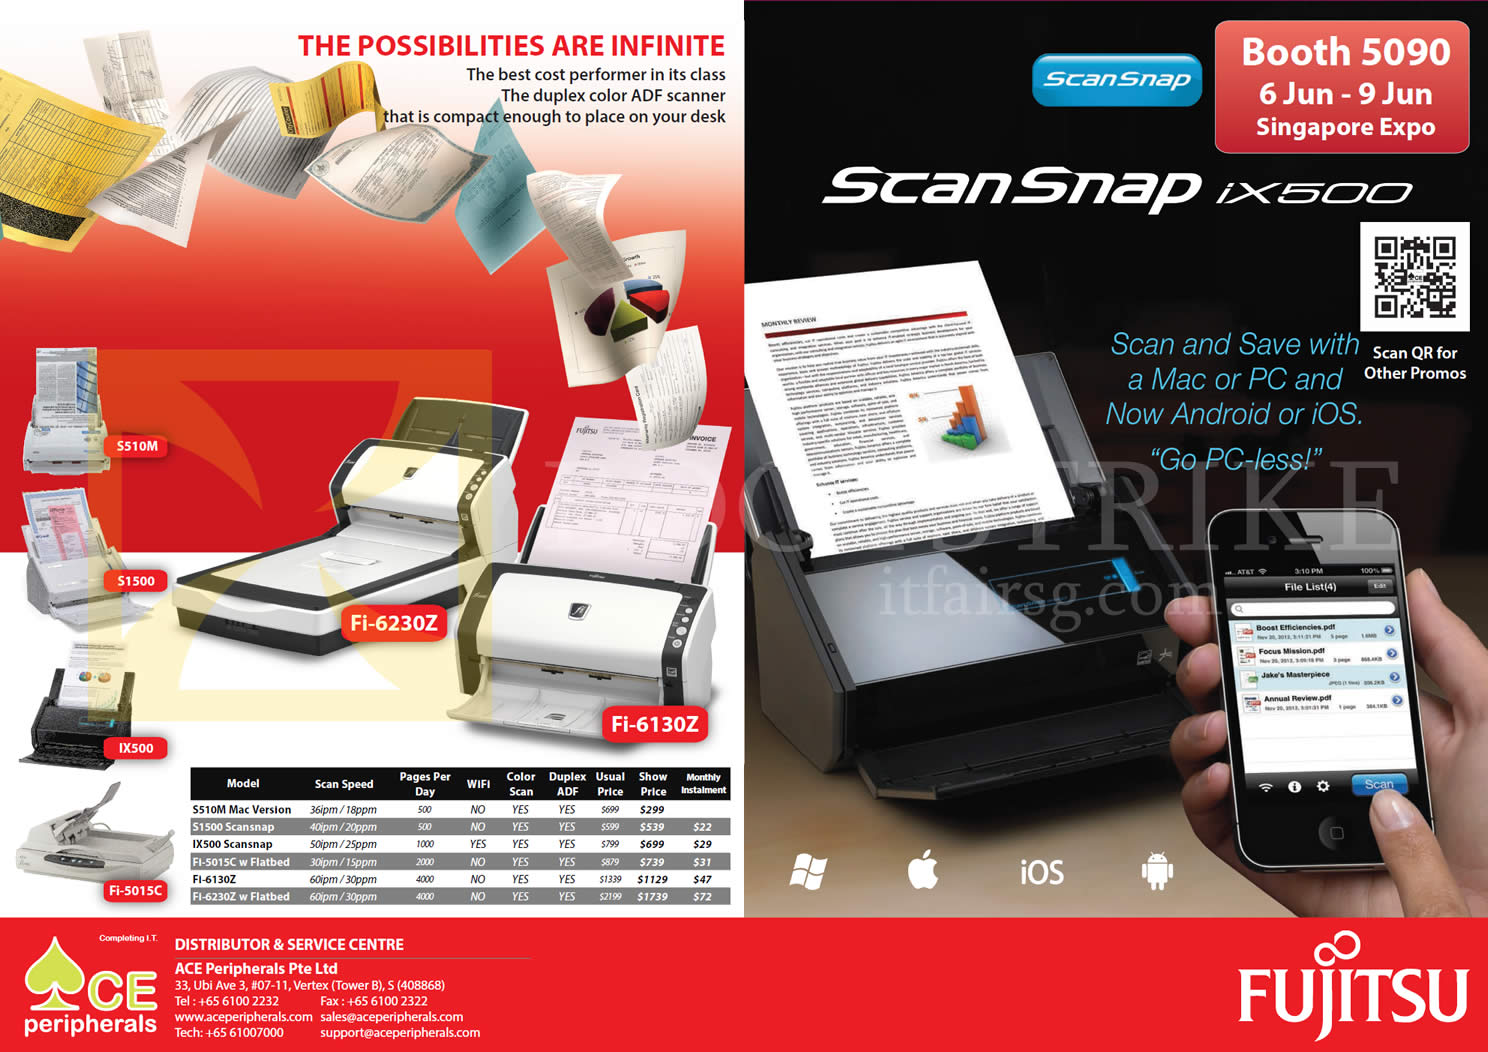 PC SHOW 2013 price list image brochure of Ace Peripherals Fujitsu Doc Scanner S510M, S1500, IX500, FI-5015C, FI-6130Z, FI-6230Z